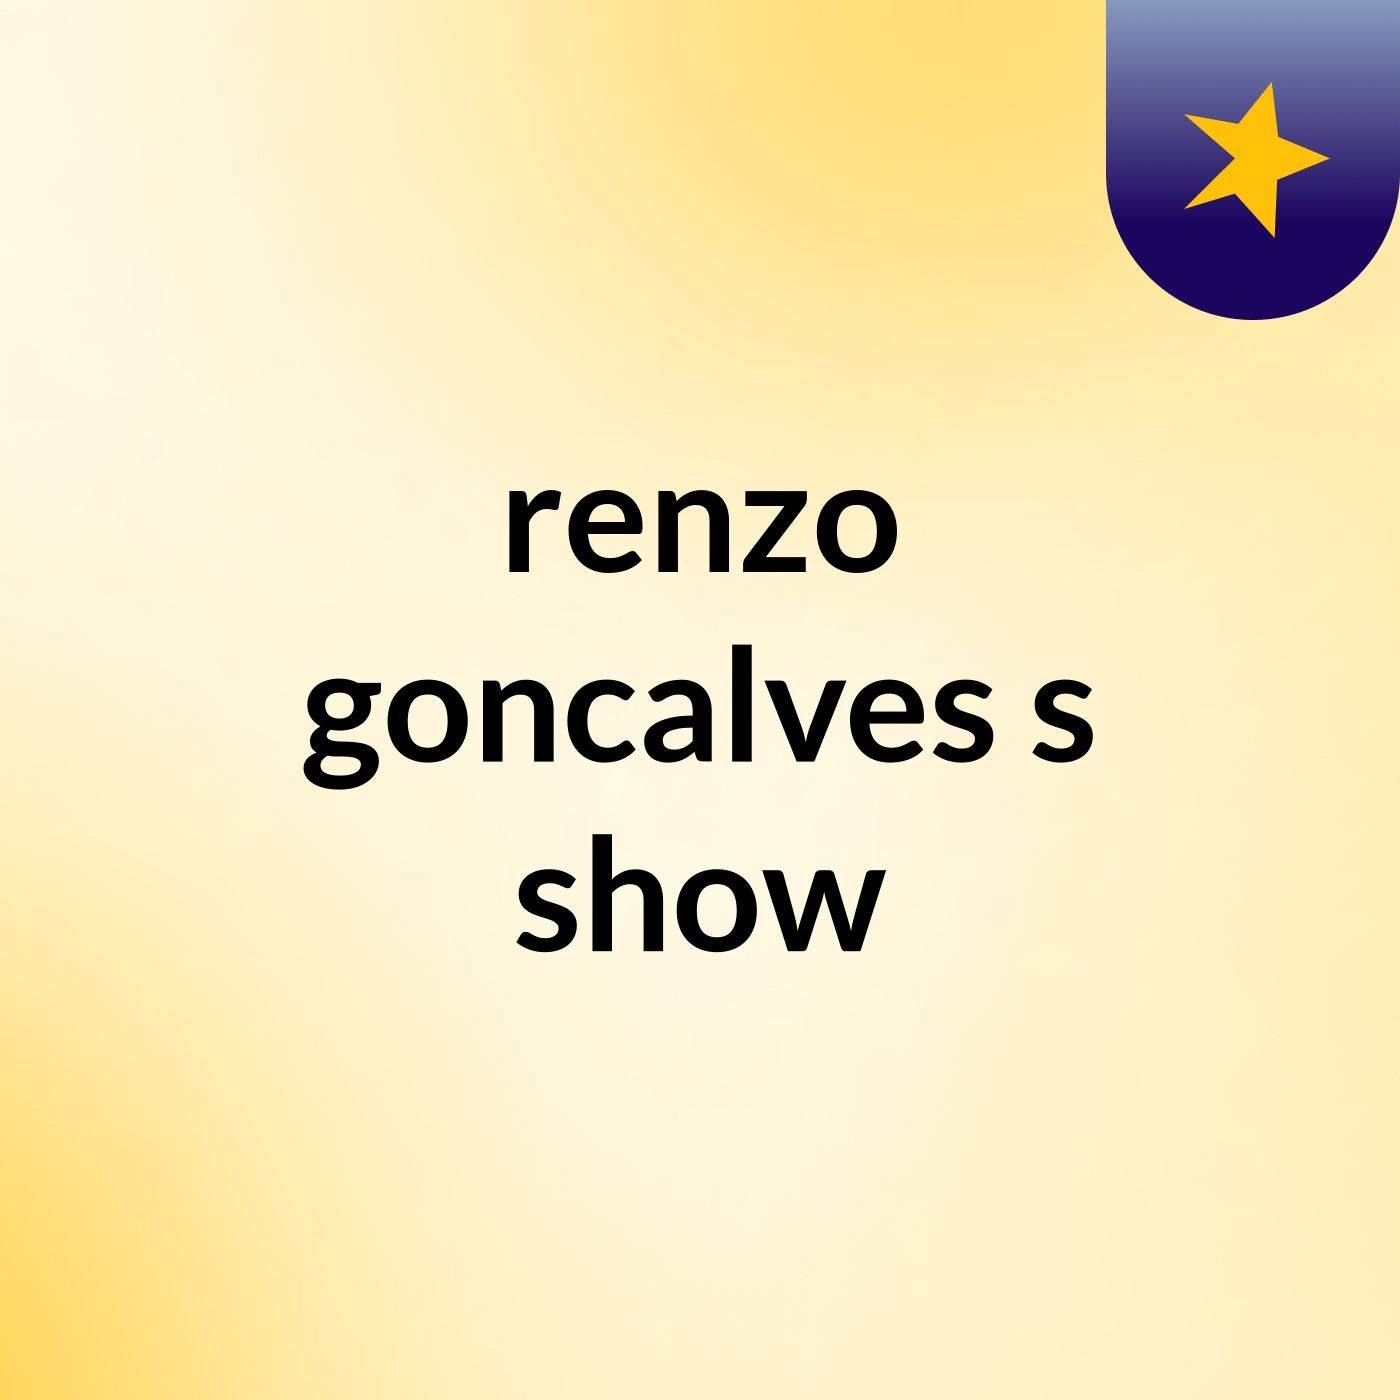 renzo goncalves's show